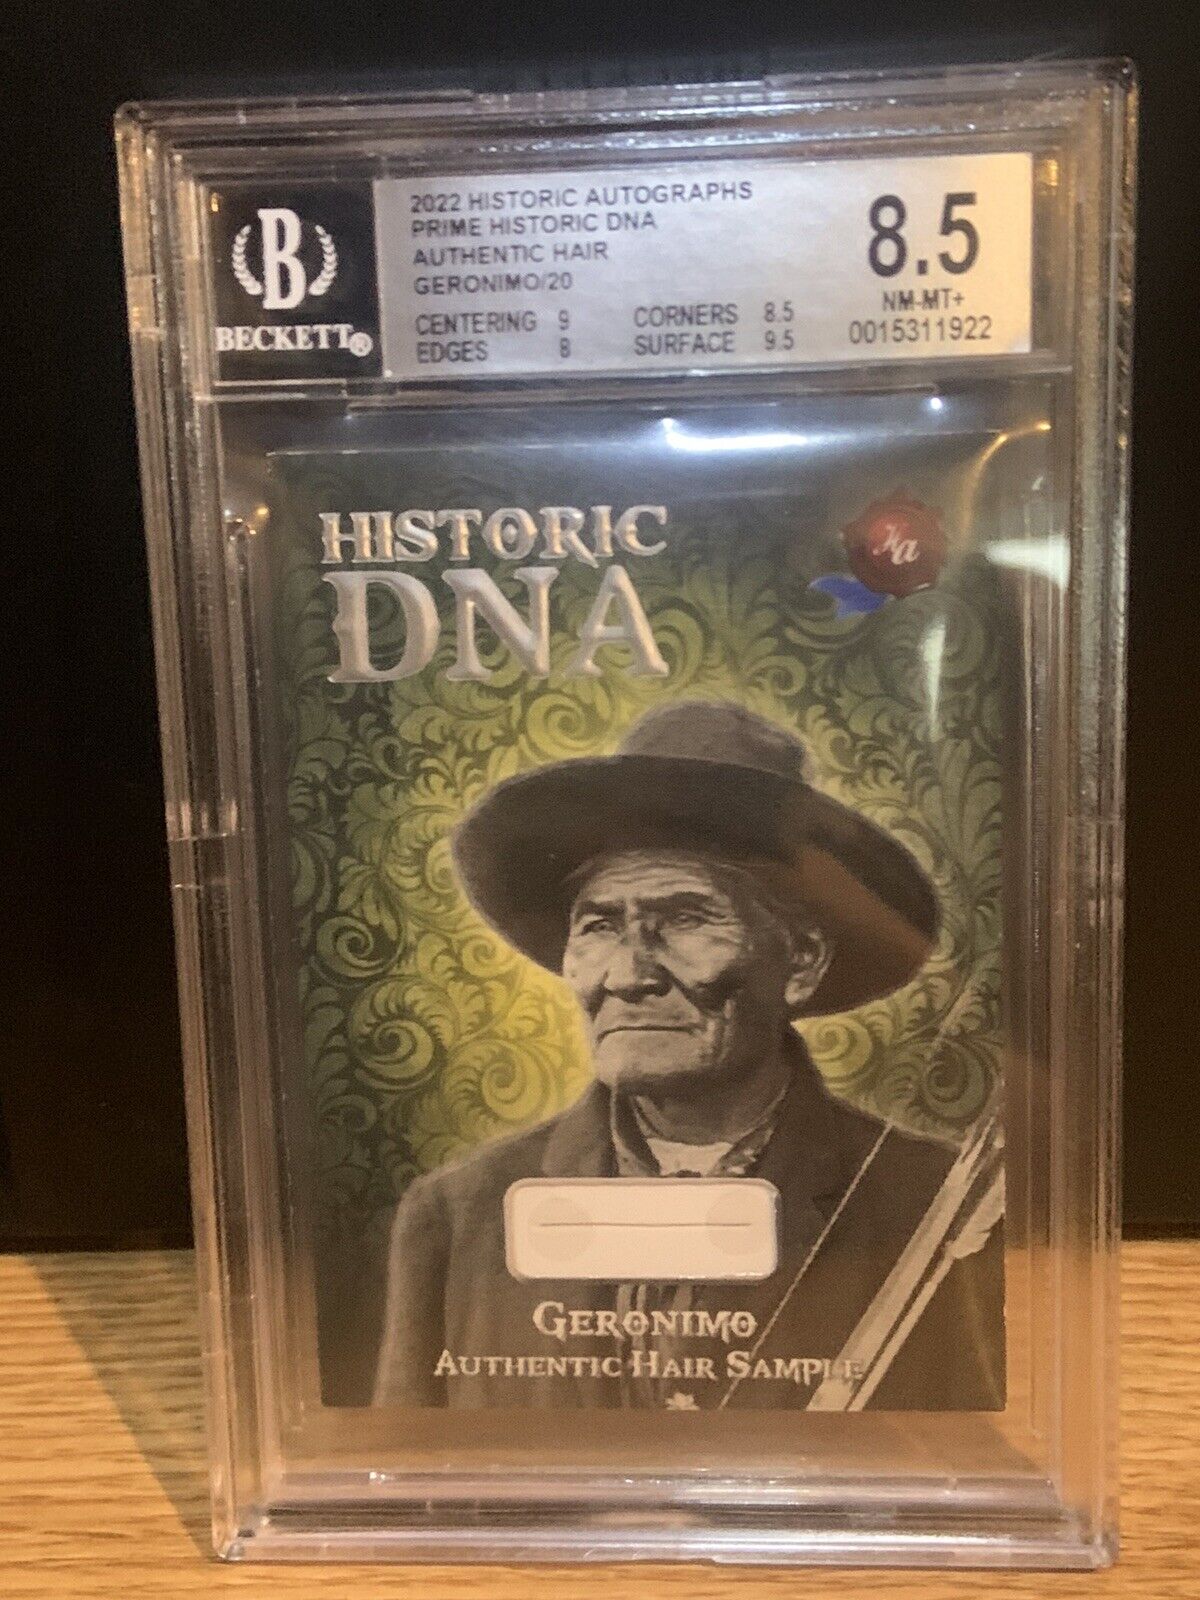 2022 Historic autographs prime DNA hair Geronimo 7/20